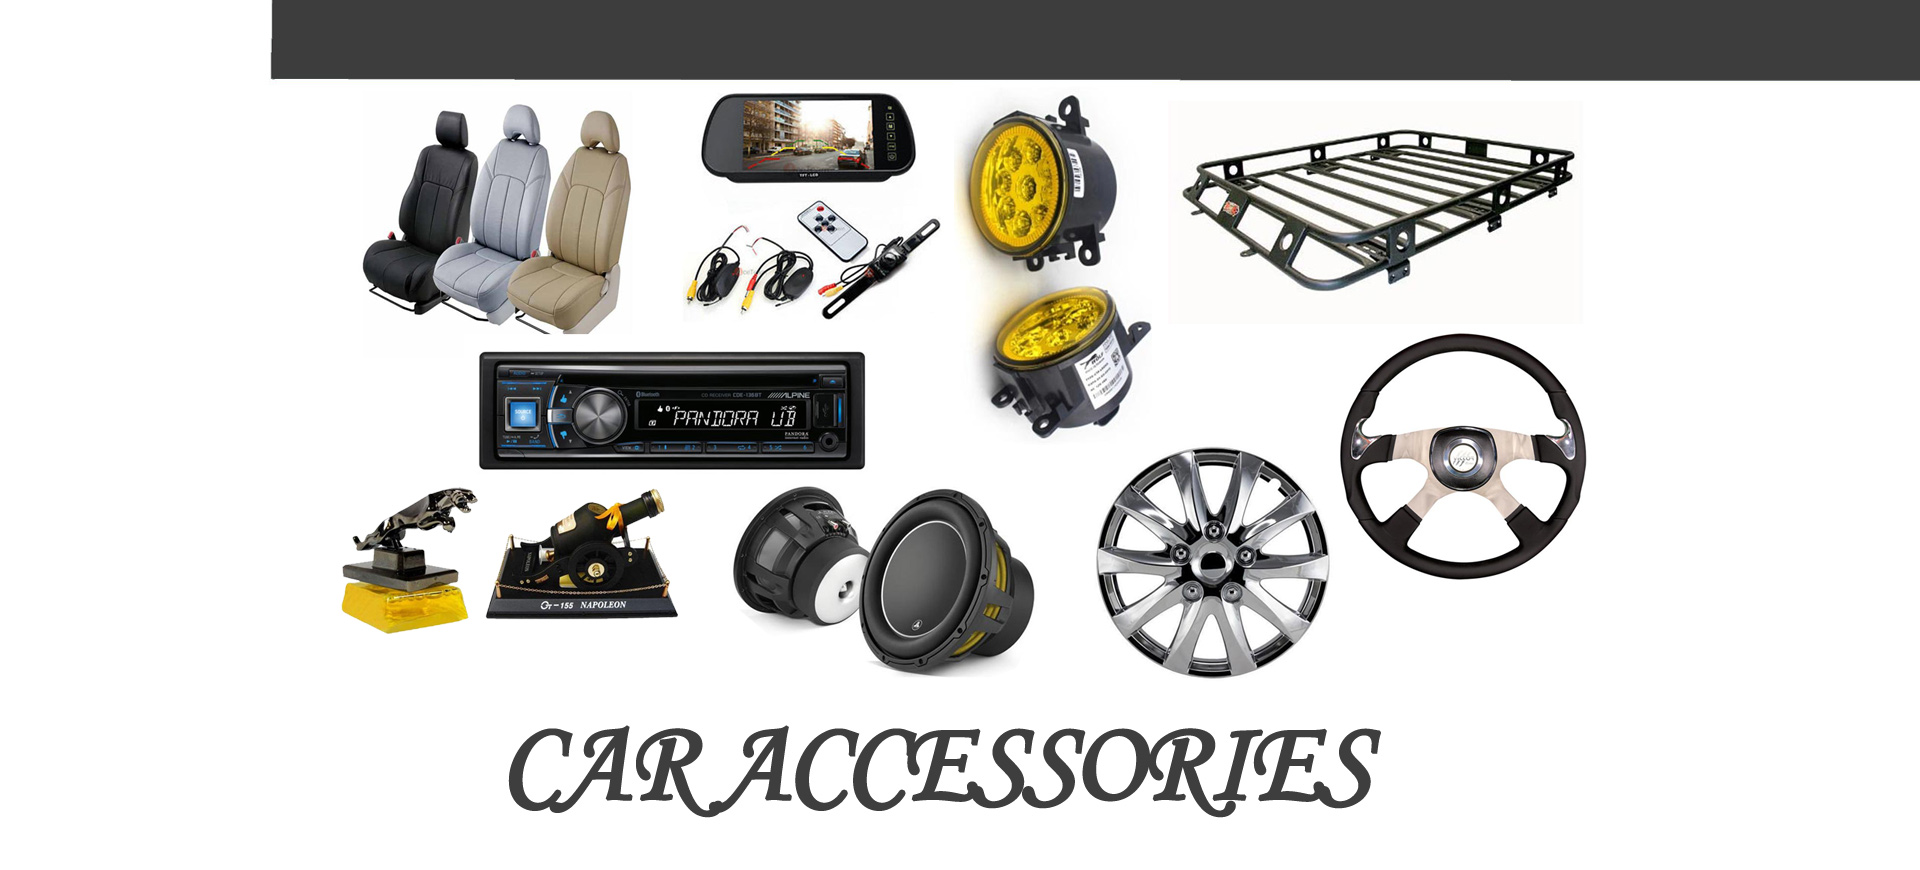 selva car accessories